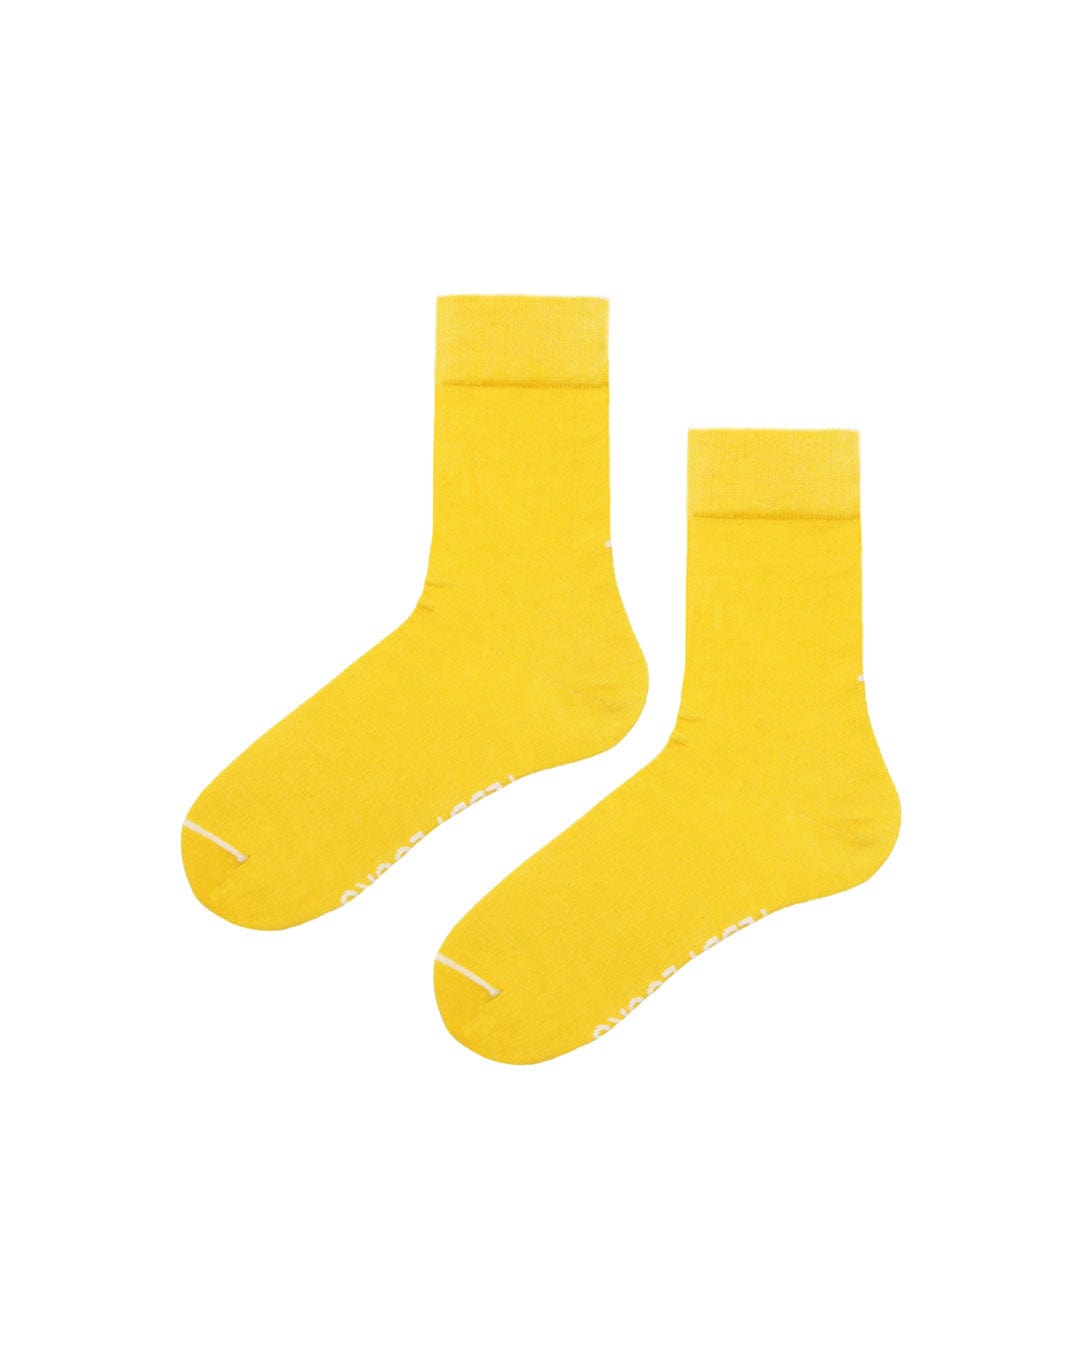 Sustainable Socks, Eco-friendly Yellow Crew Socks